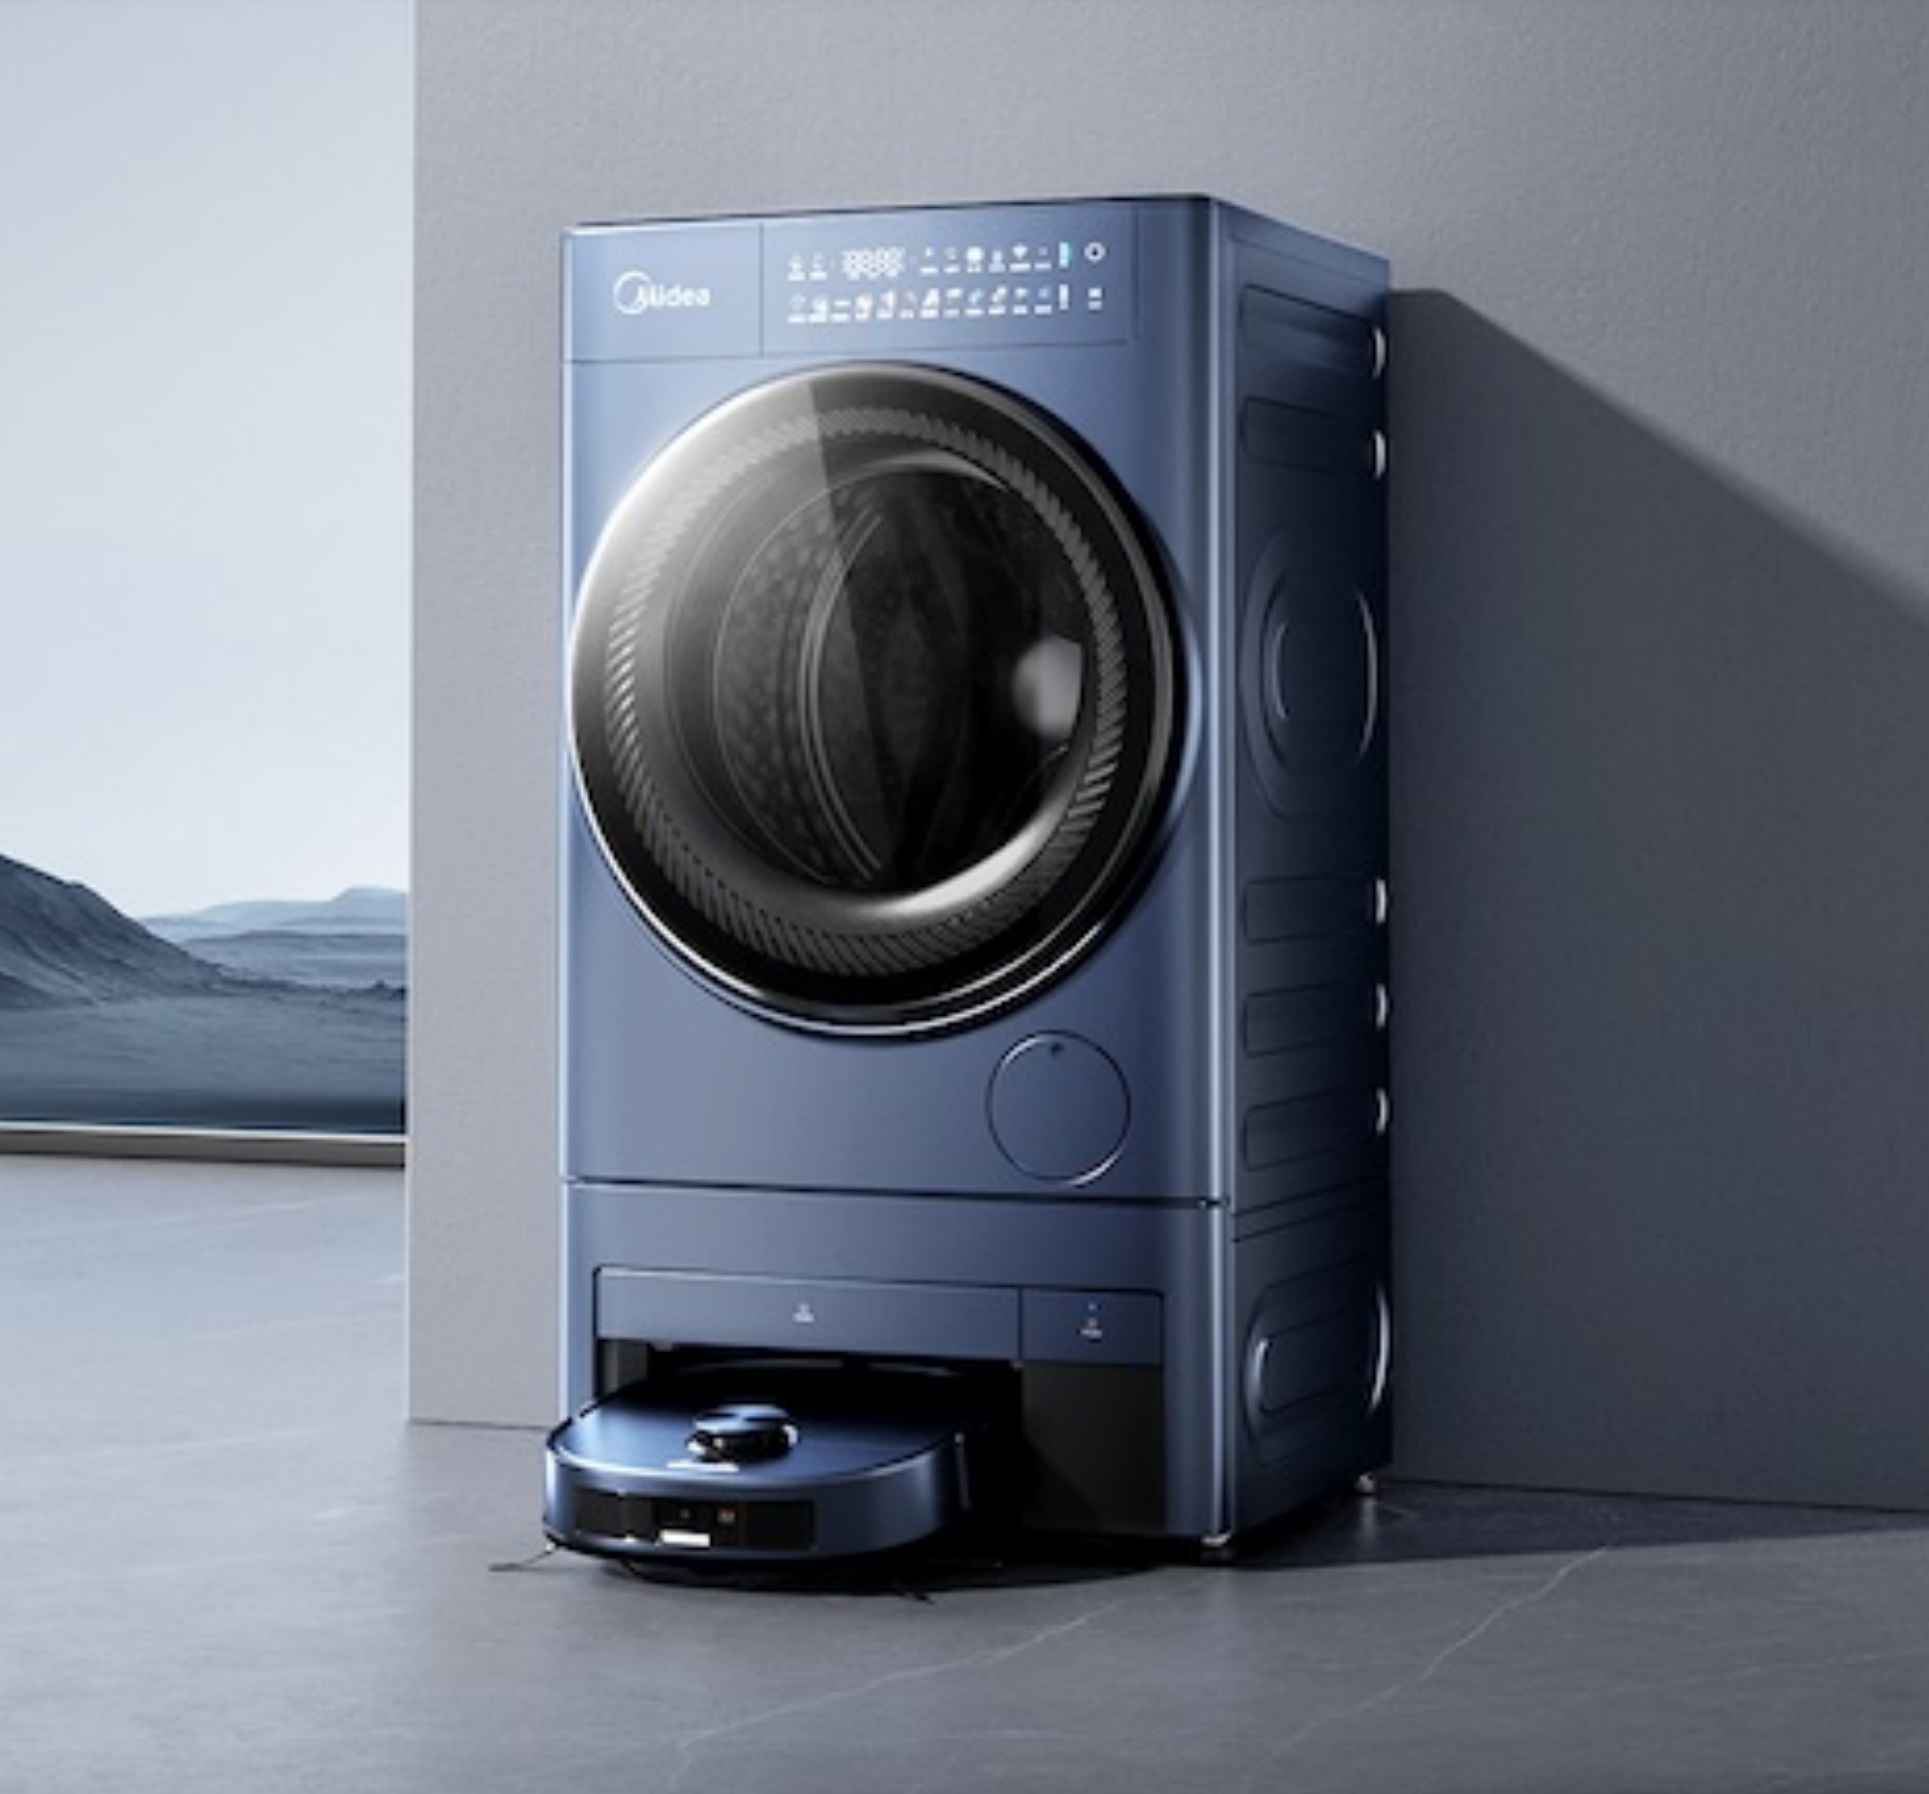 Washing Machines: Laundry Care Advanced Technology